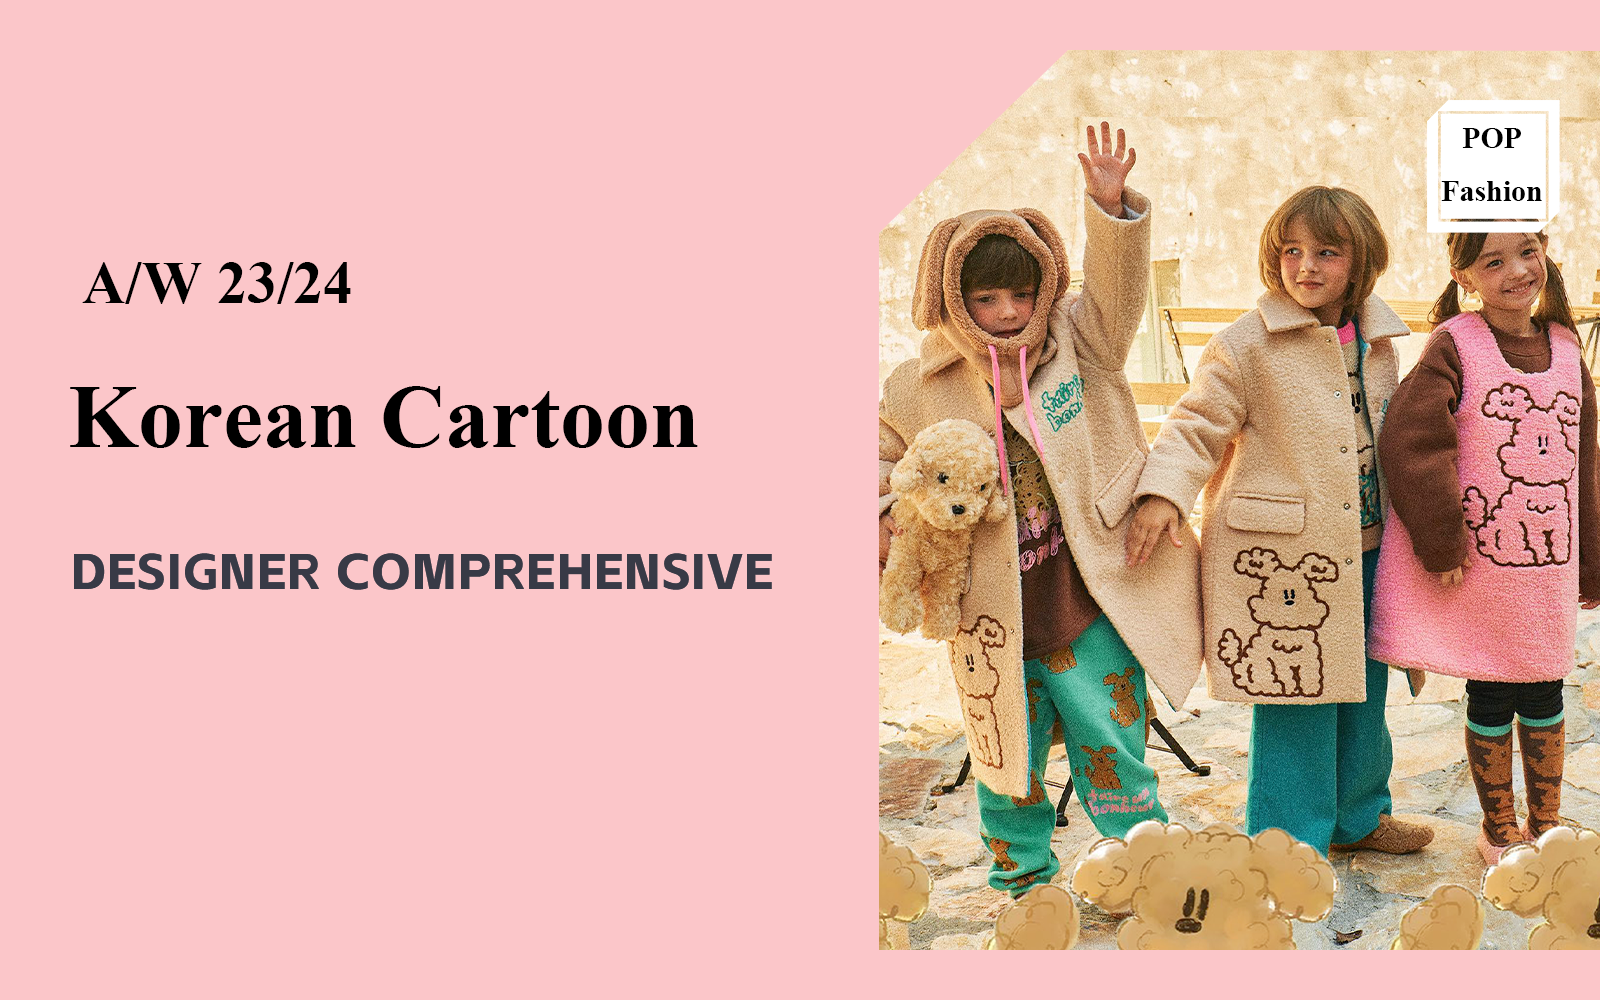 Korean Cartoon -- The Comprehensive Analysis of Kidswear Designer Brand